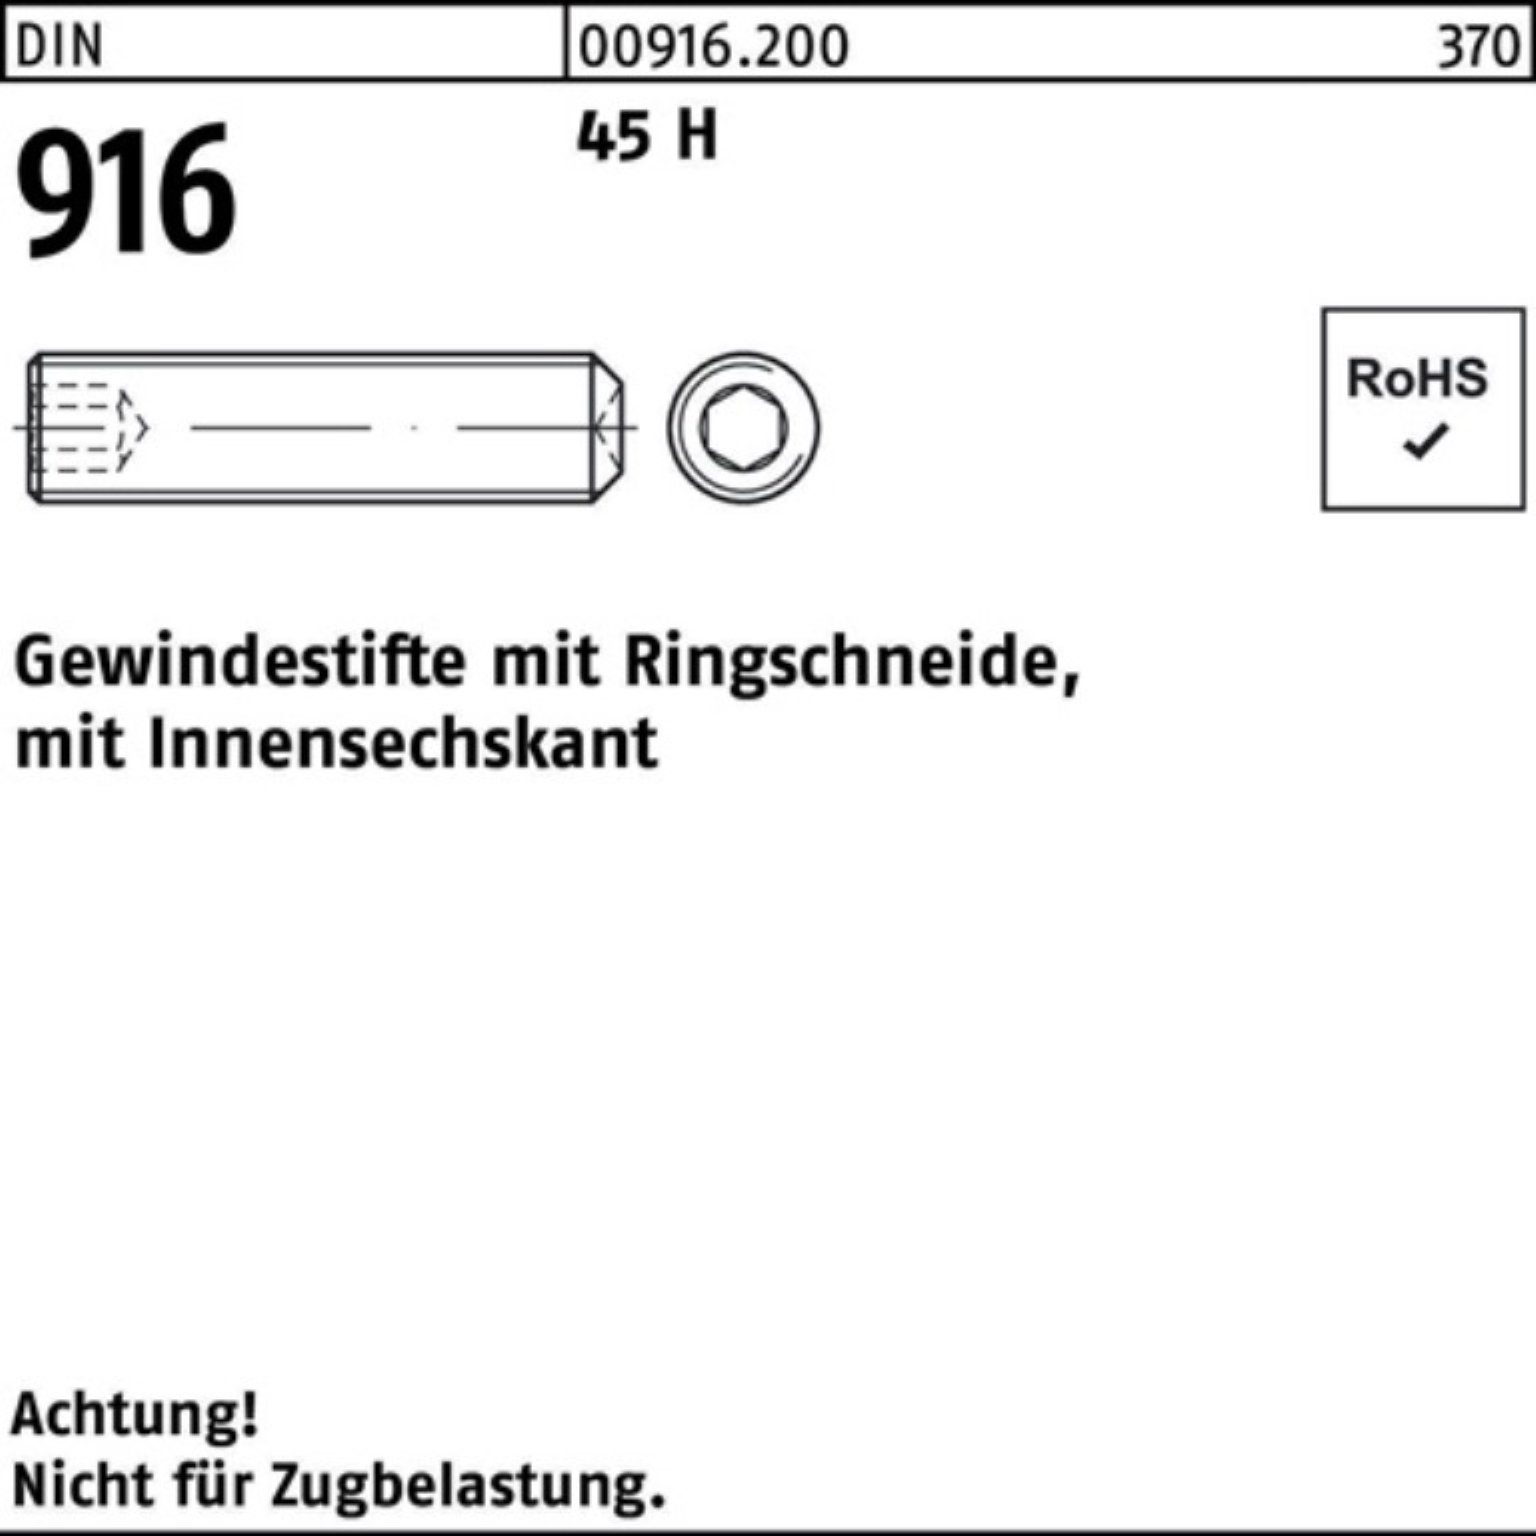 45 Pack 8 M10x Gewindebolzen Ringschn./Innen-6kt DIN H Gewindestift 916 Reyher St 200 200er